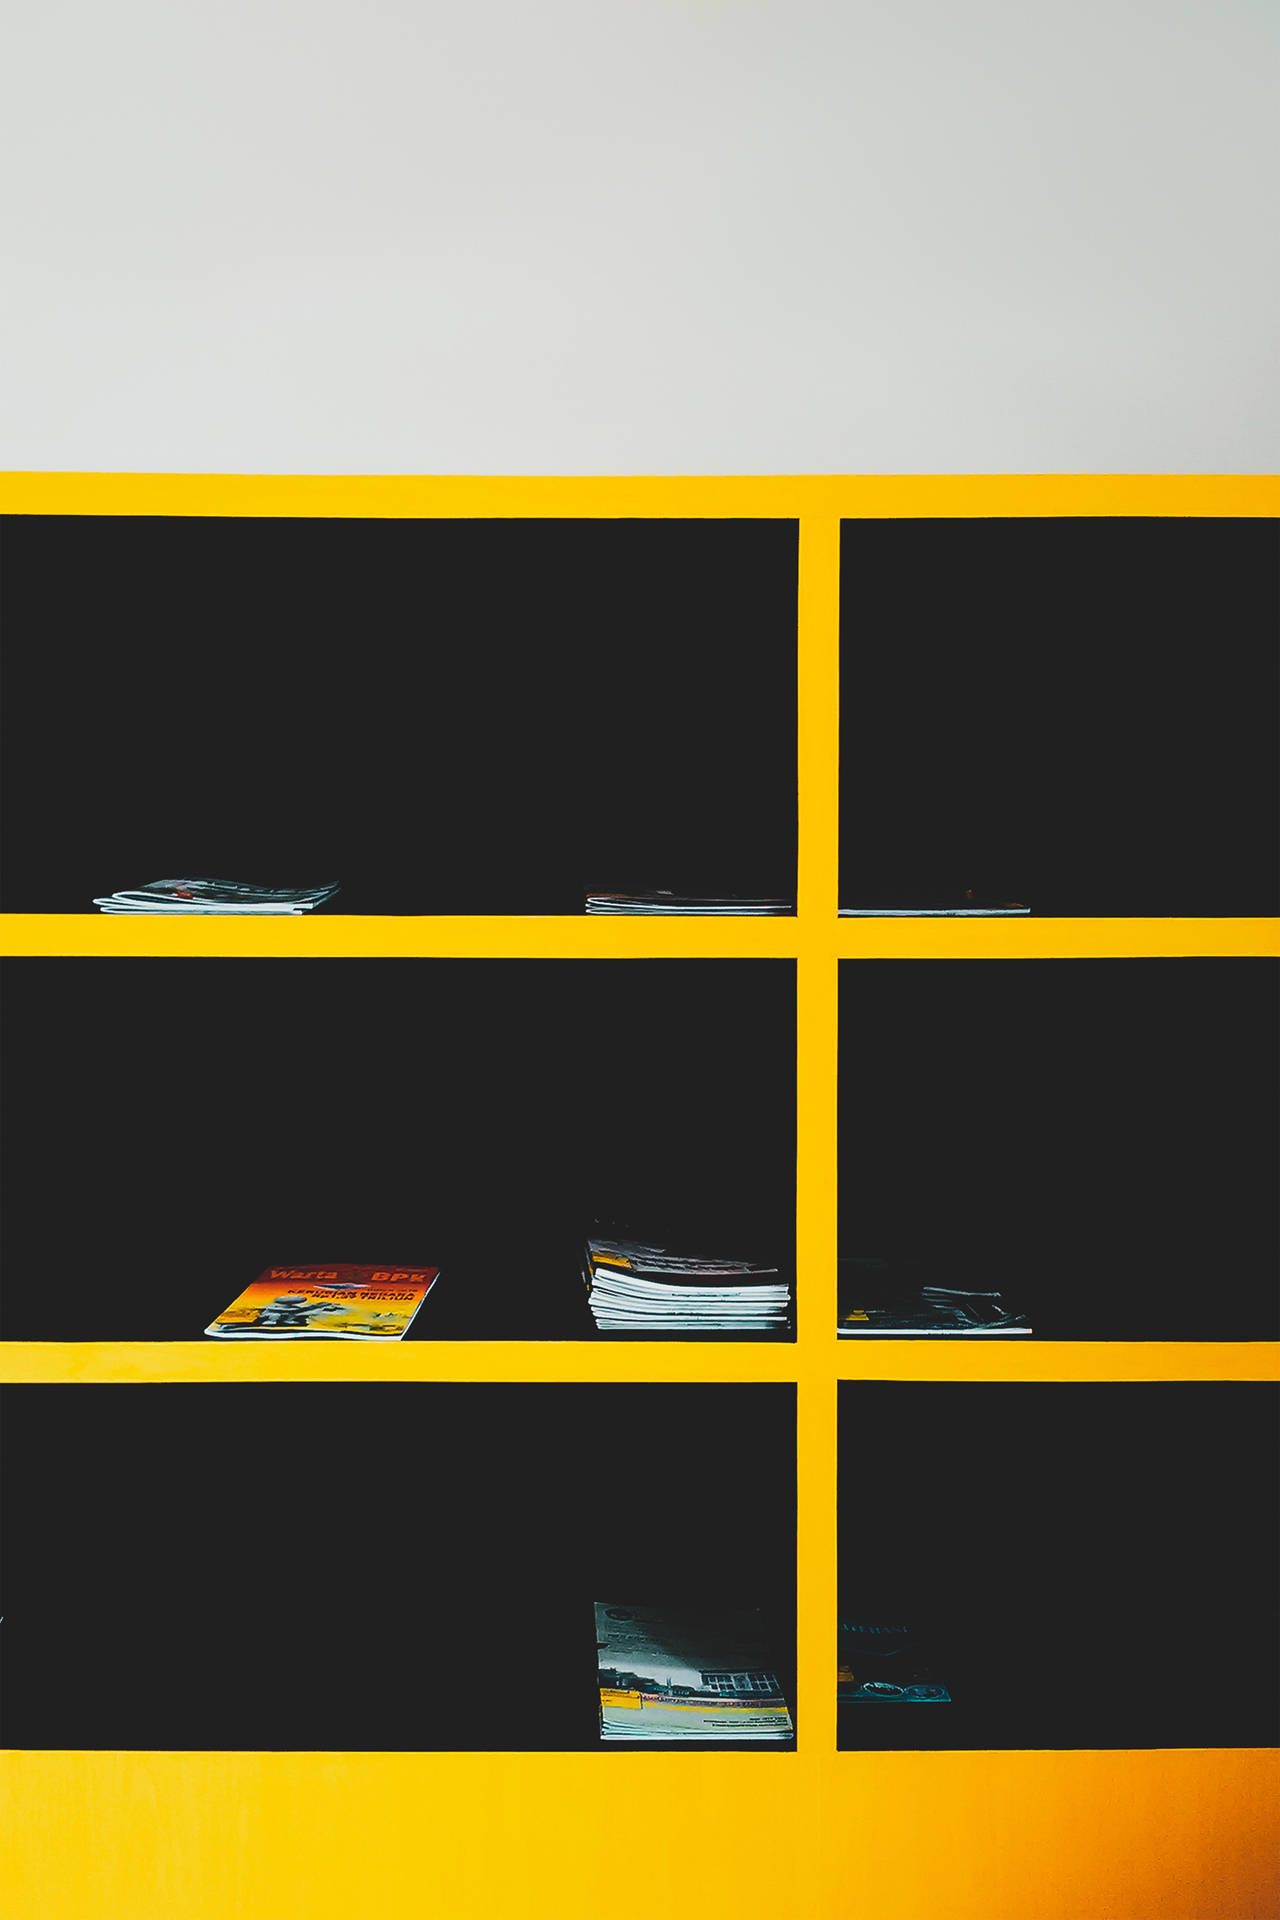 Magazines On Black & Yellow Cabinet Background